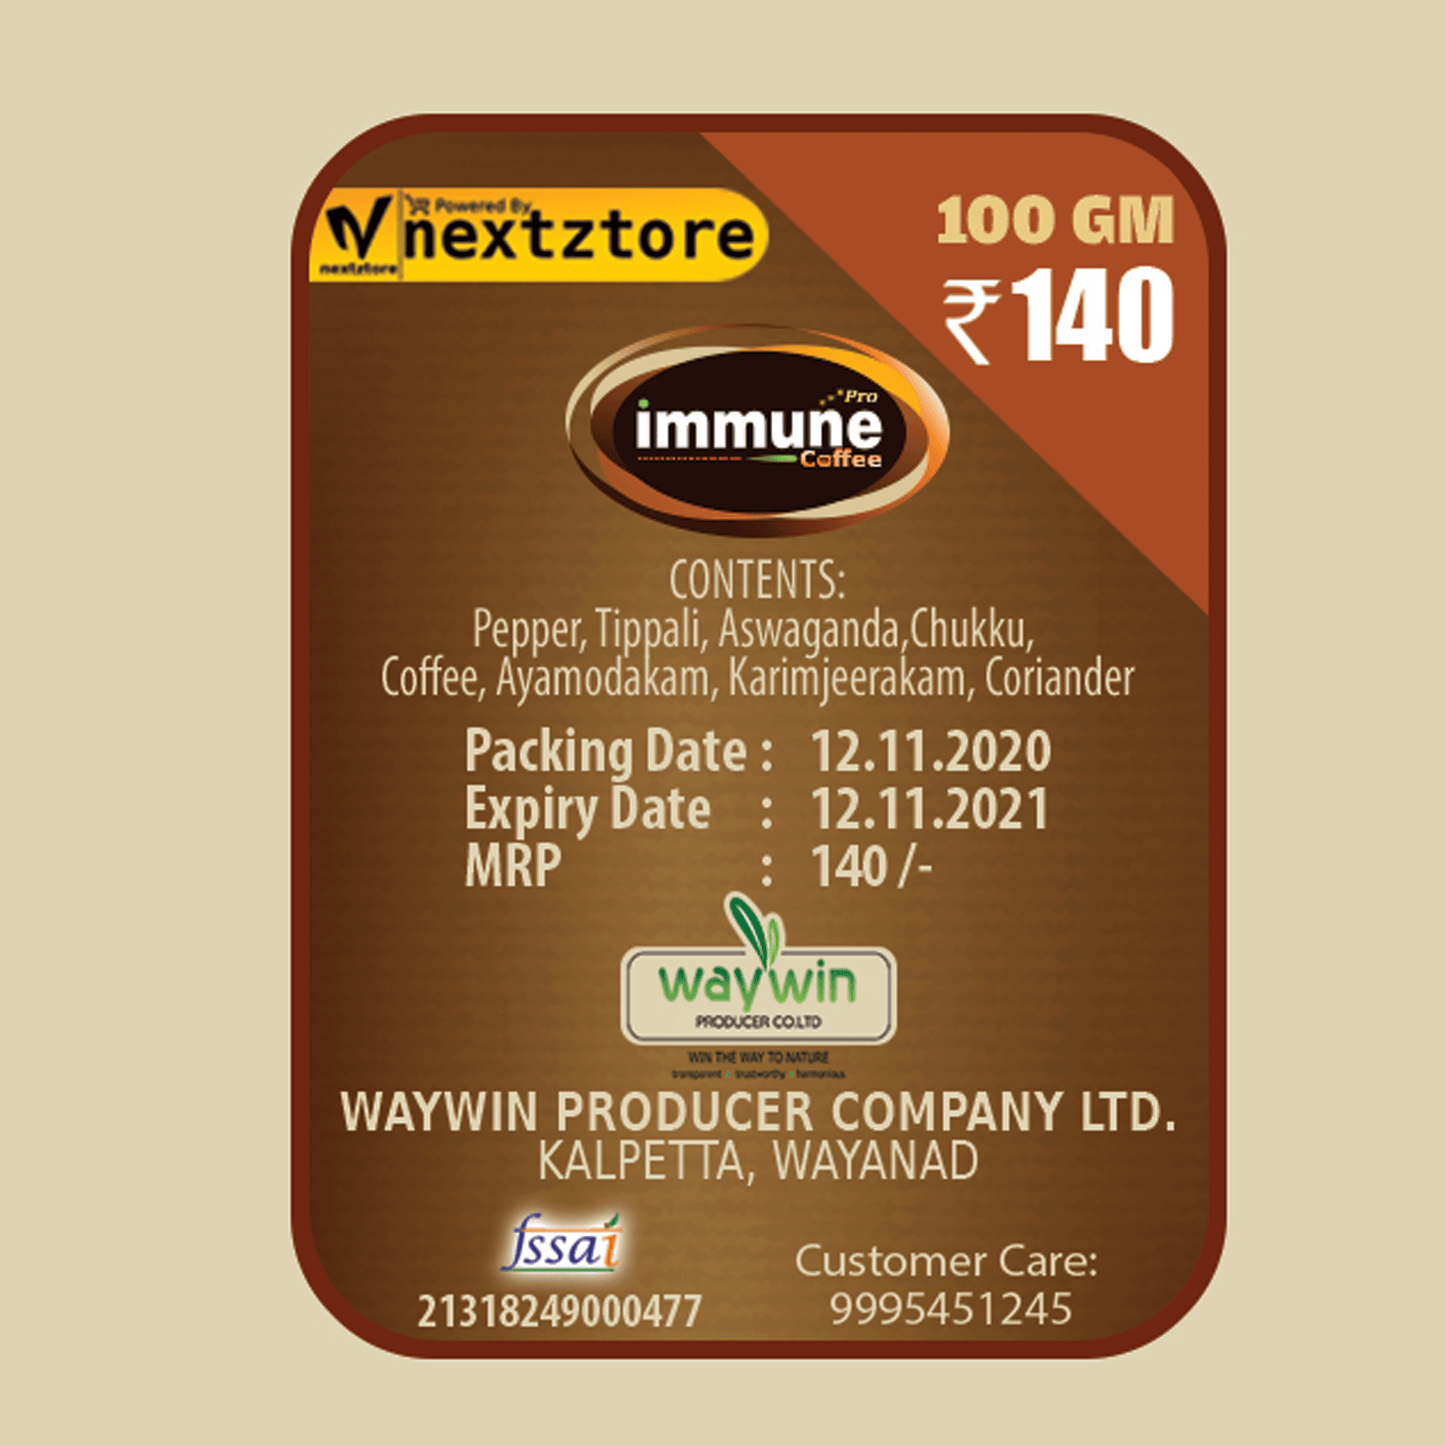 waywin Immune coffee pro  - 100 gm Pack - Food Care INDIA